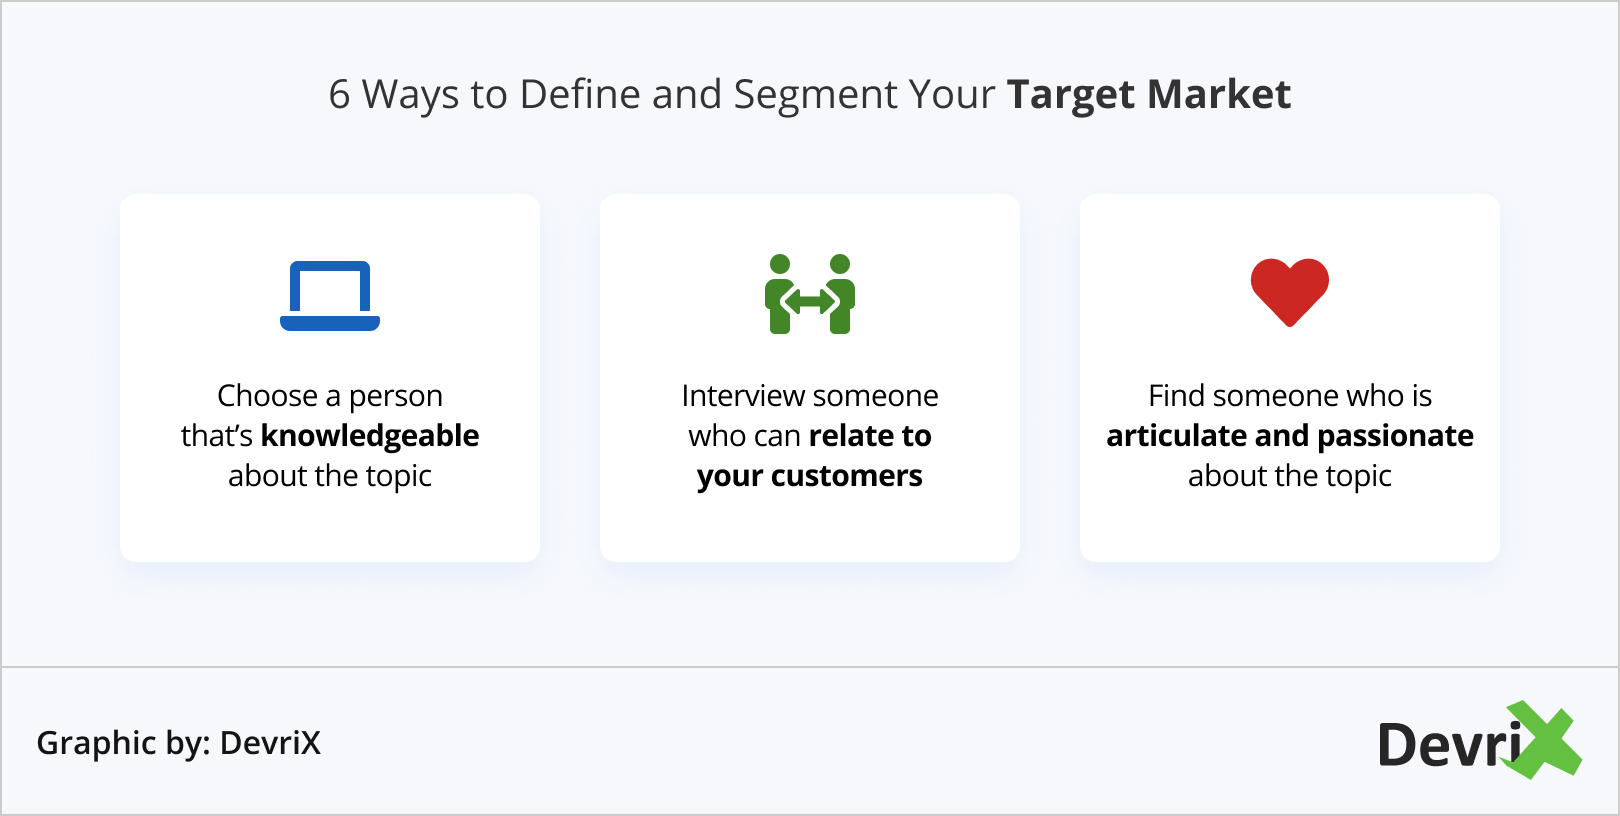 6 Ways to Define and Segment Your Target Market